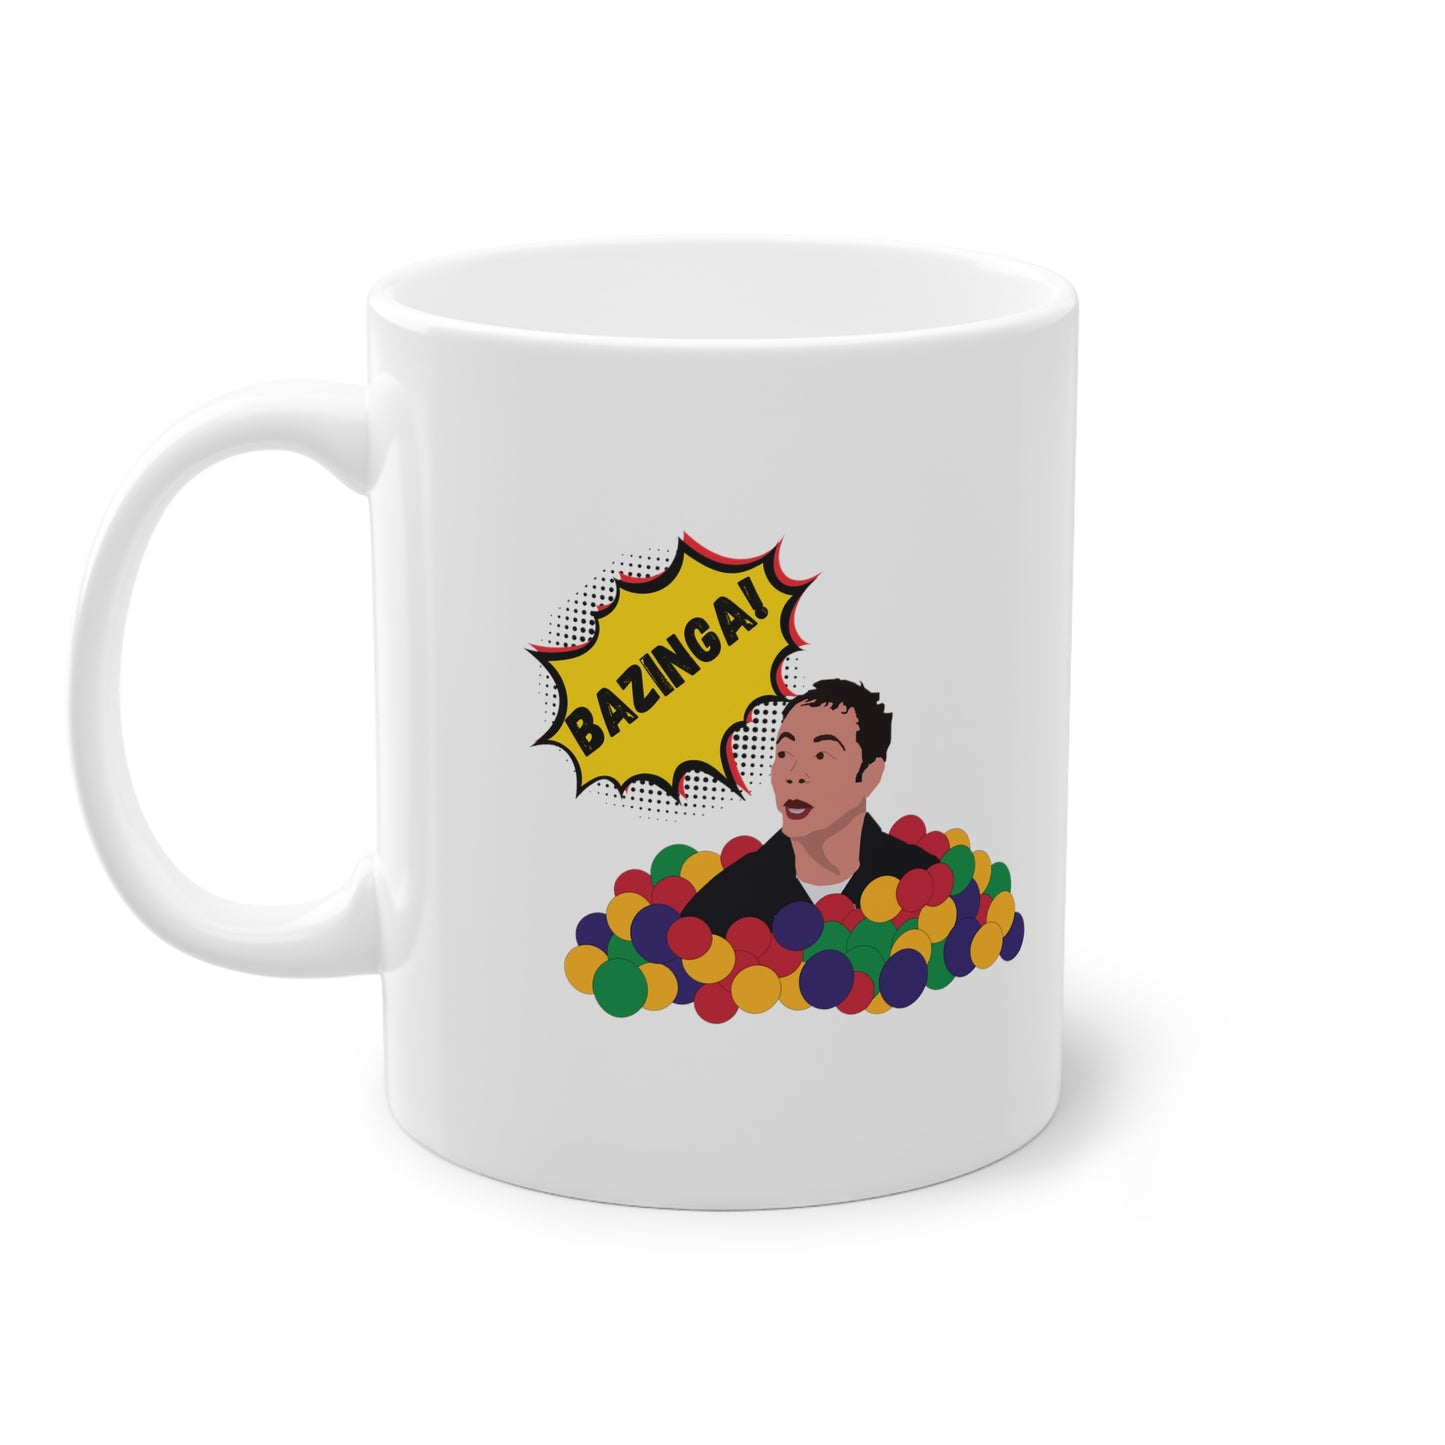 Sheldon Cooper ‘Bazinga!’ - Inspired Mug